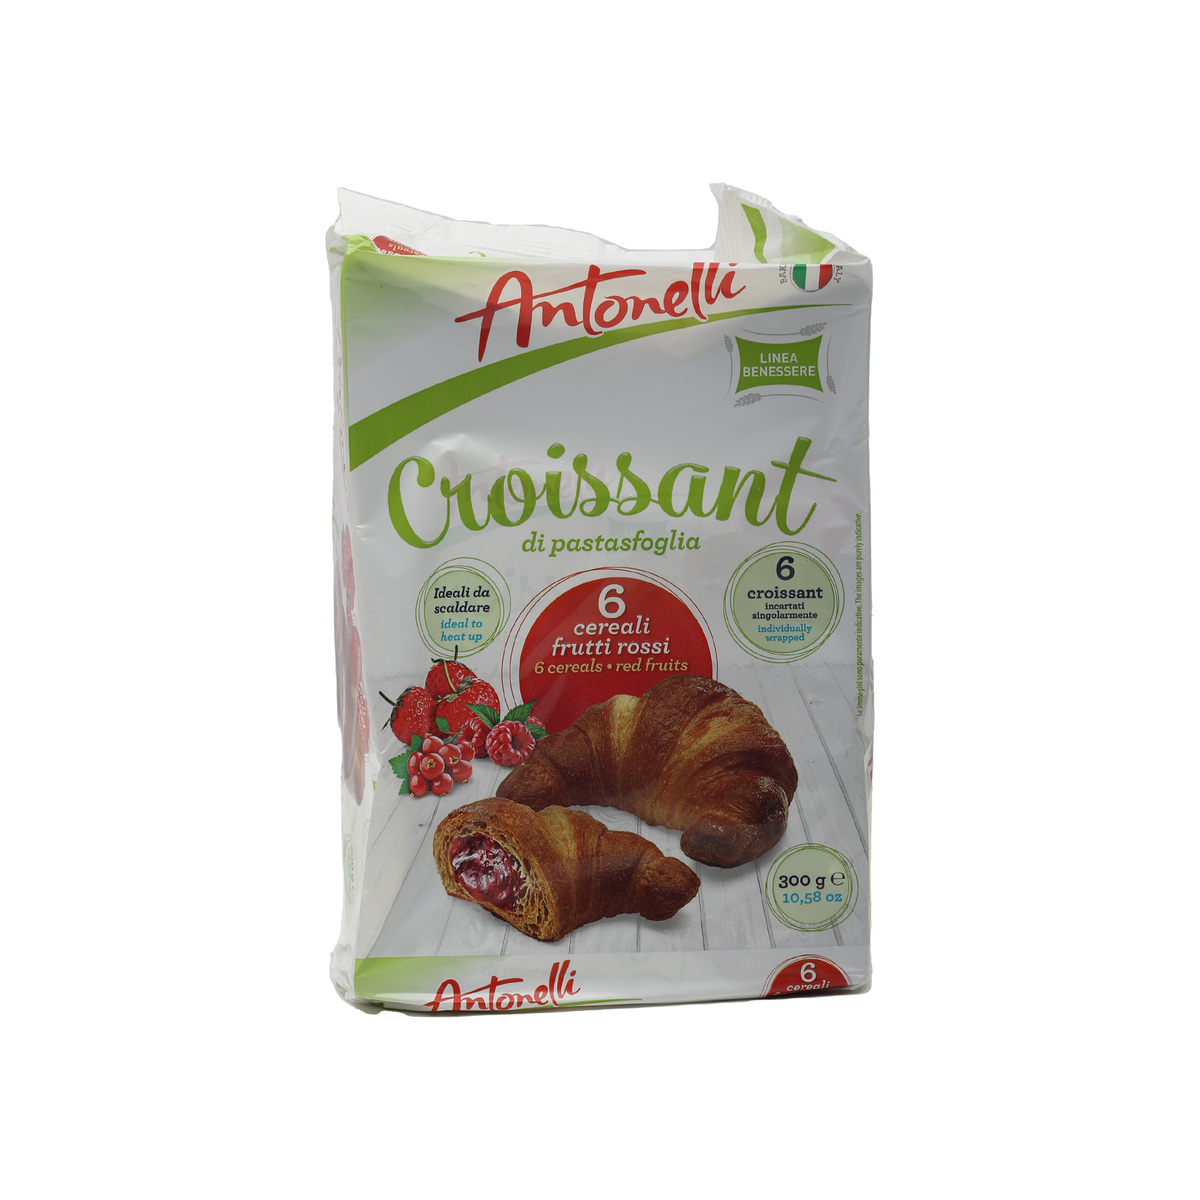 Antonelli Croissant Cereals & Red Fruits 6 pcs 300 g